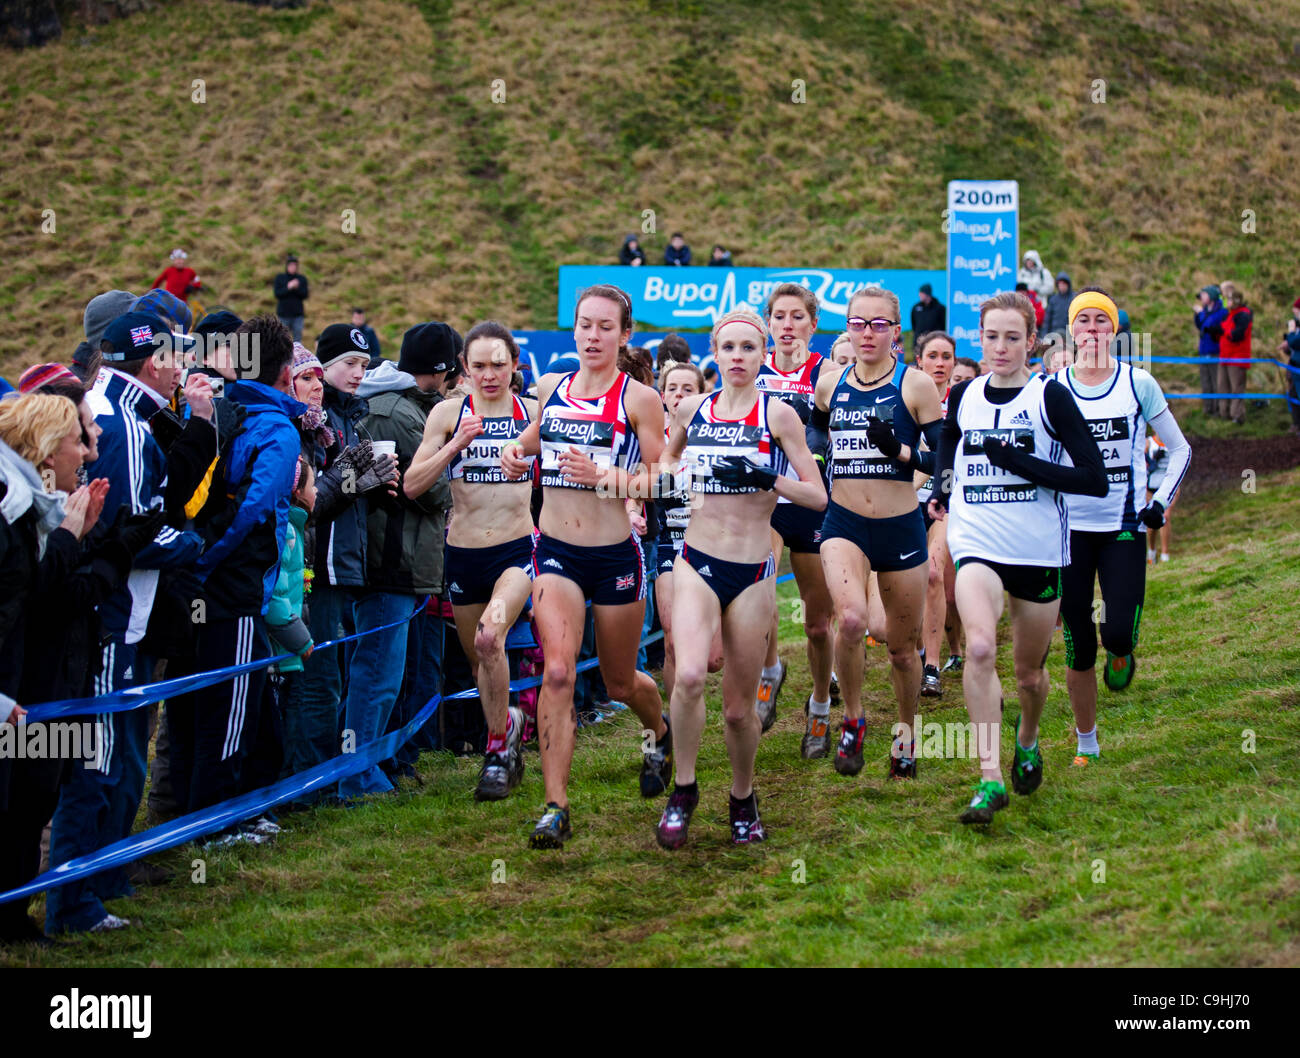 BUPA Great Edinburgh Cross Country Run, 7. Januar 2012, Senior Frauen 6-Km-Rennen. Gewinner: Fionnuala Britton EUR, zweiter: Gemma Stahl GBR, Drittens: Elle Baker GBR. Stockfoto